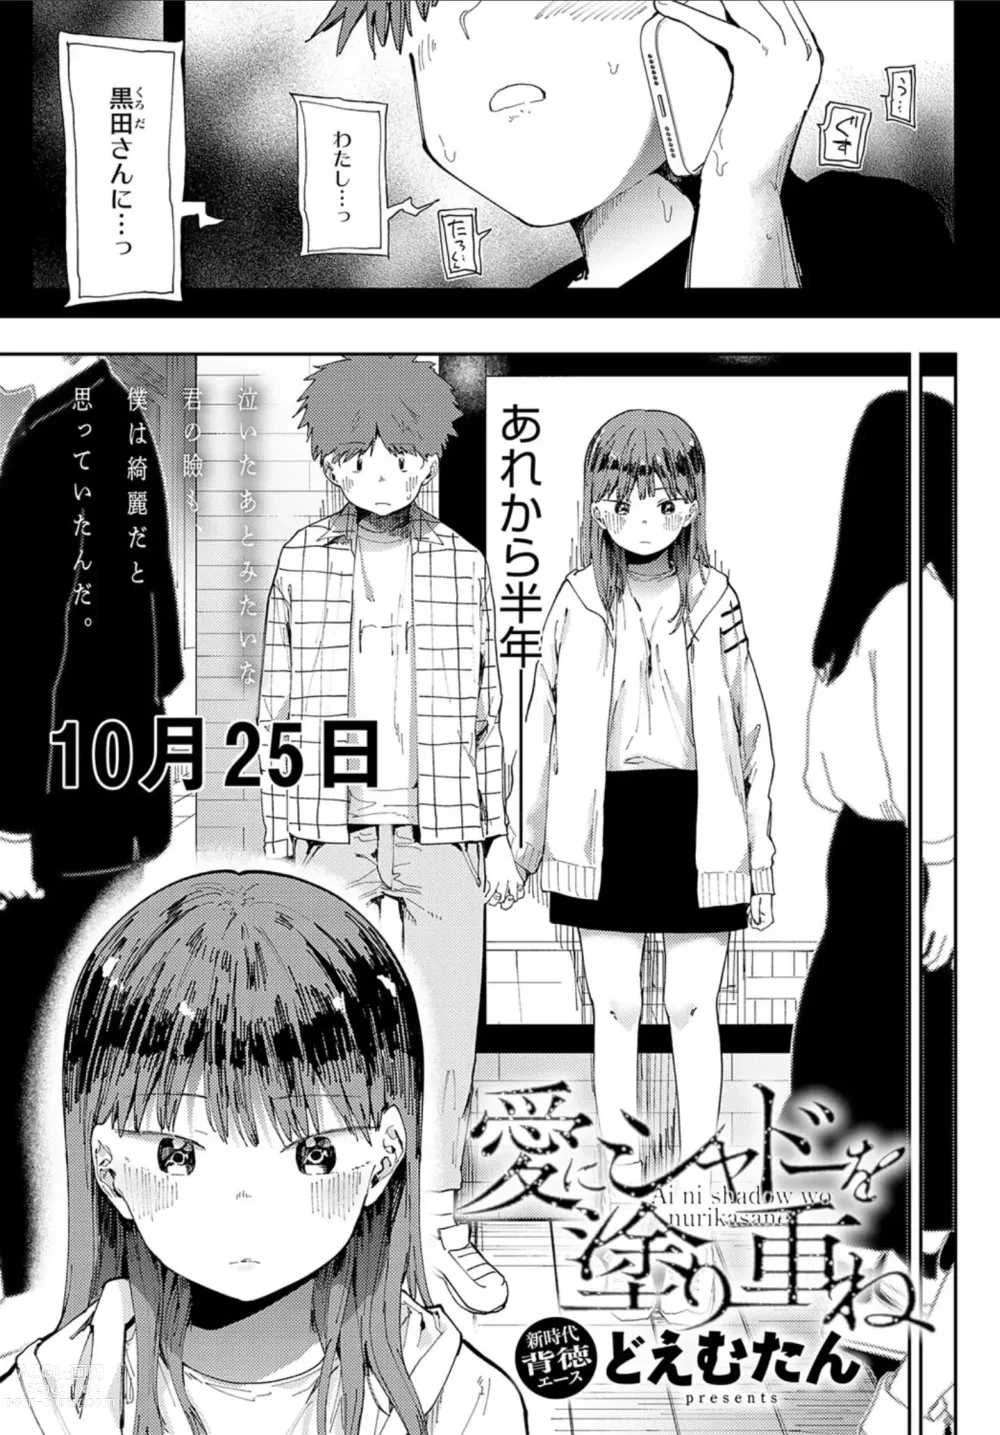 Page 5 of manga Ai ni Shadow wo Nuri Kasane